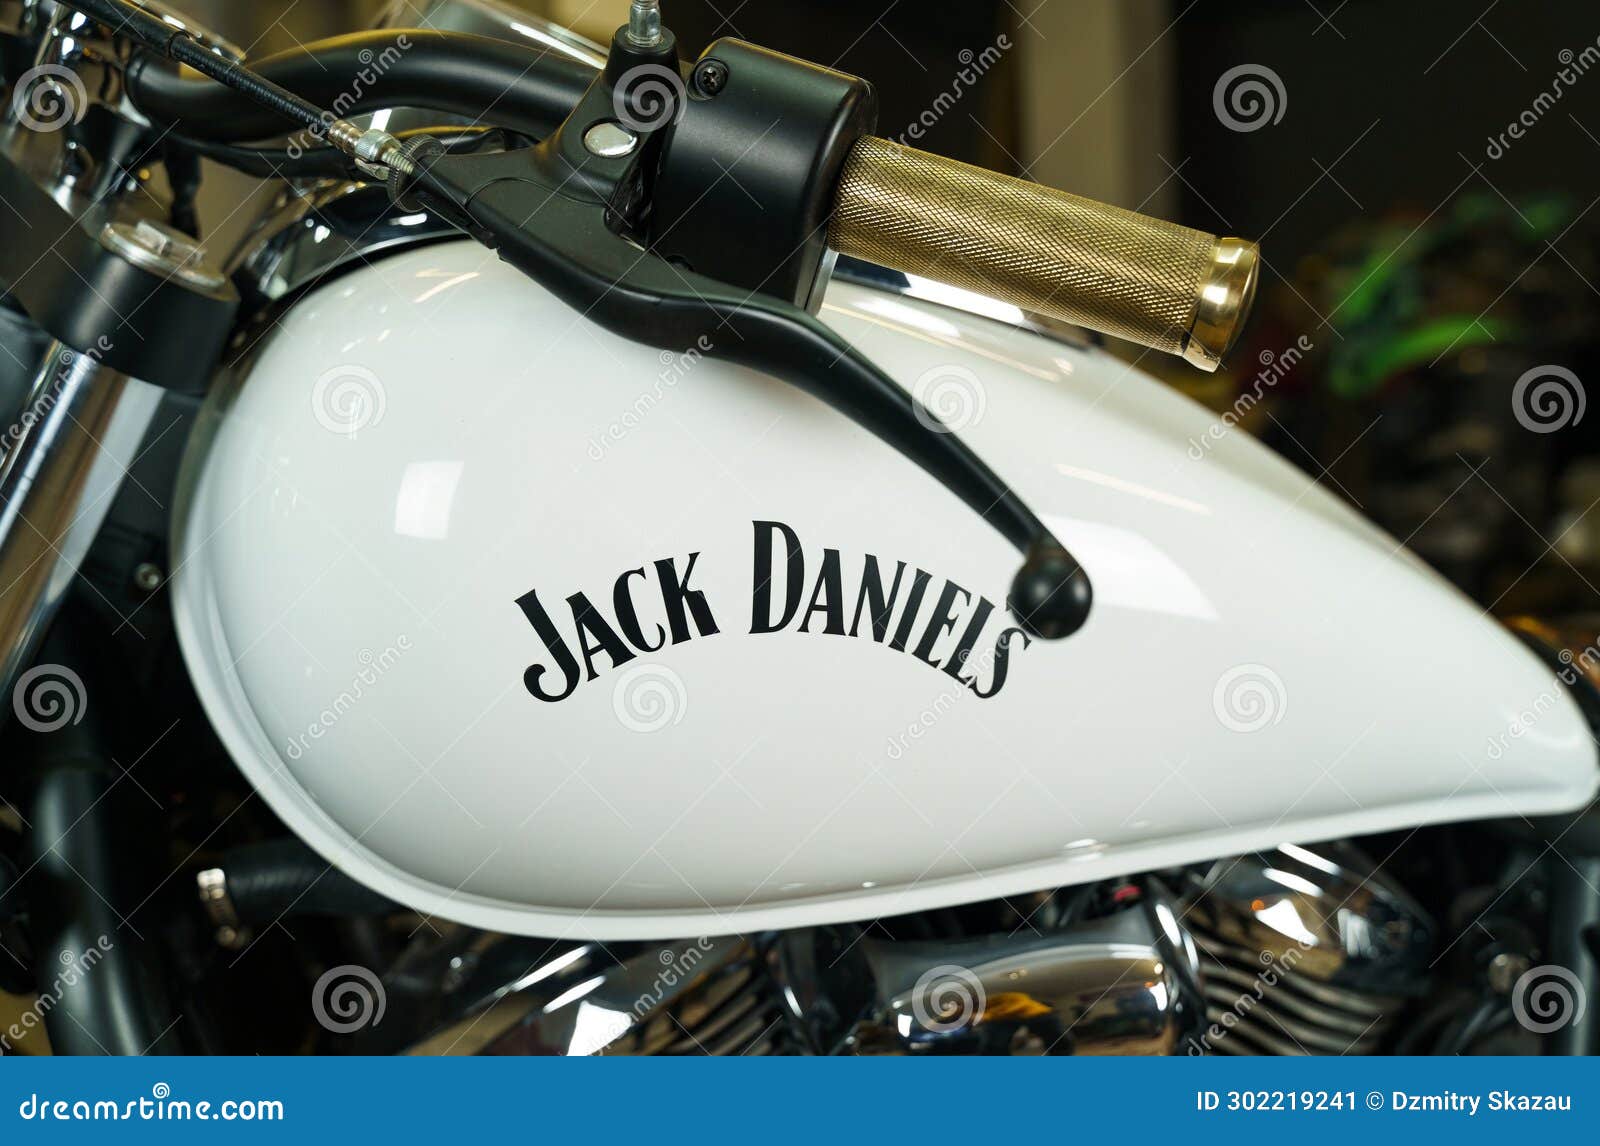 Harley Davidson Bicycle and Jack Daniels Barrel. Editorial Photo ...